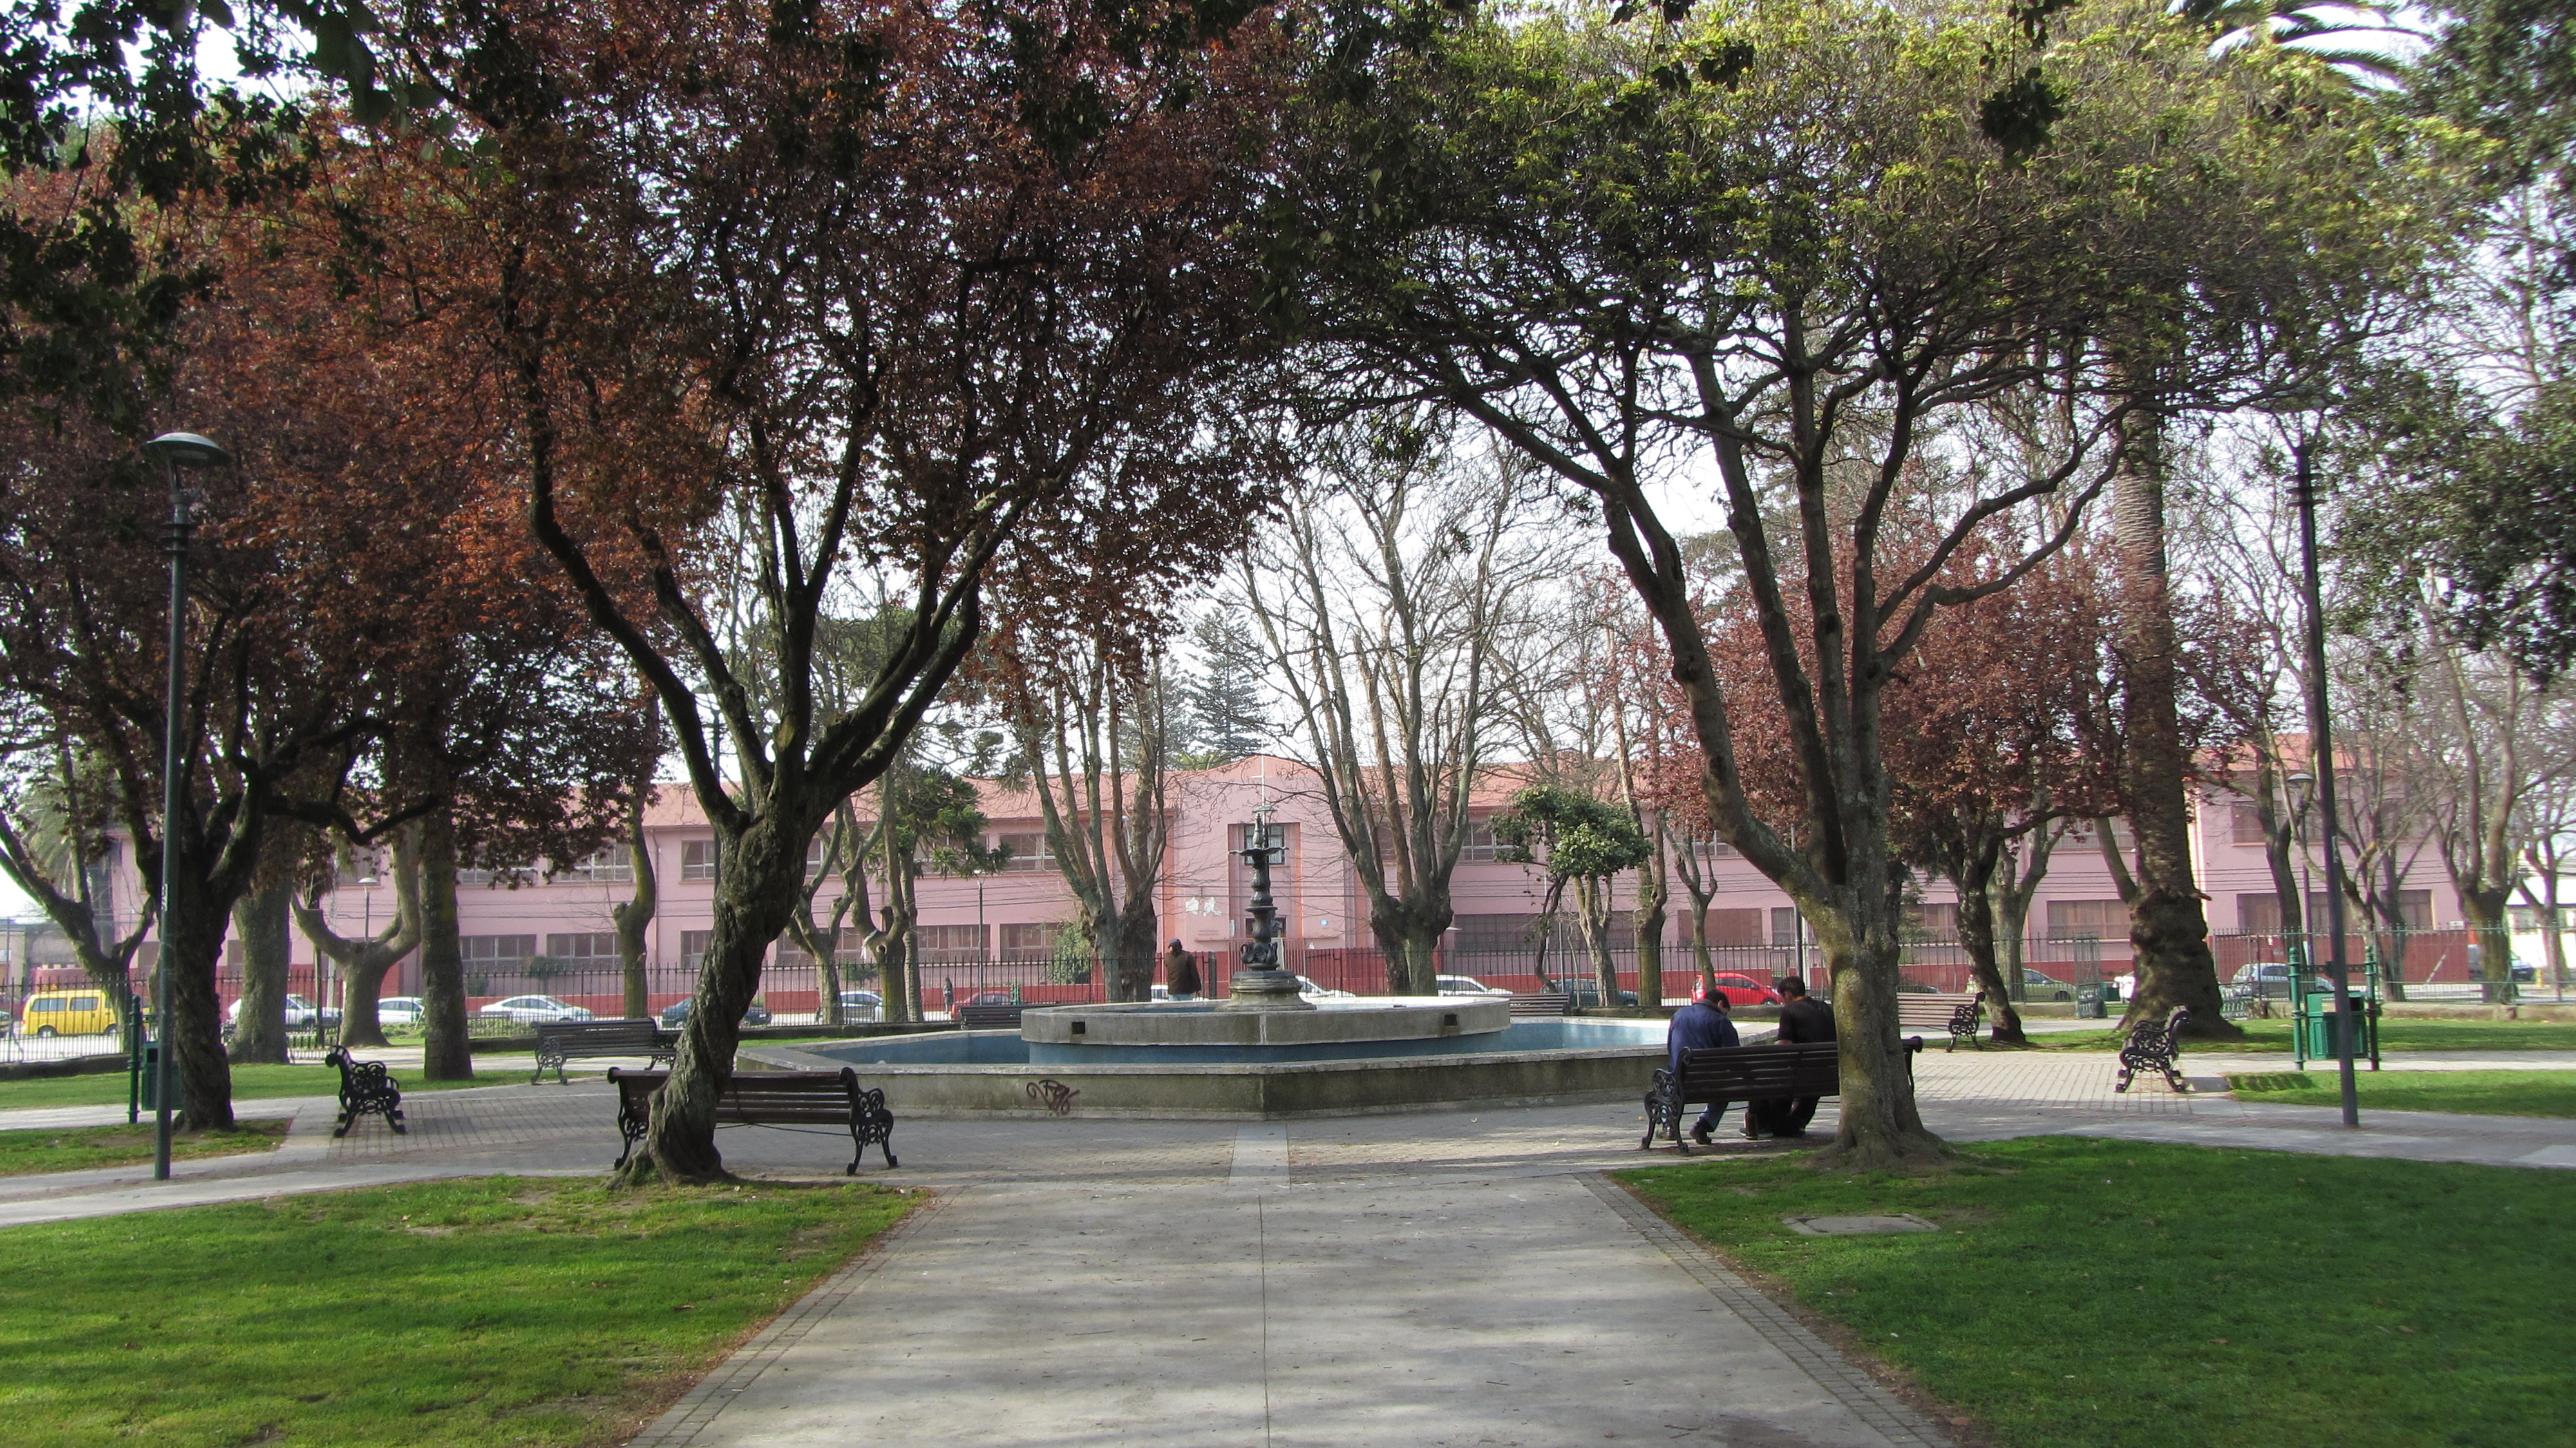 File:Plaza Cruz.JPG - Wikimedia Commons